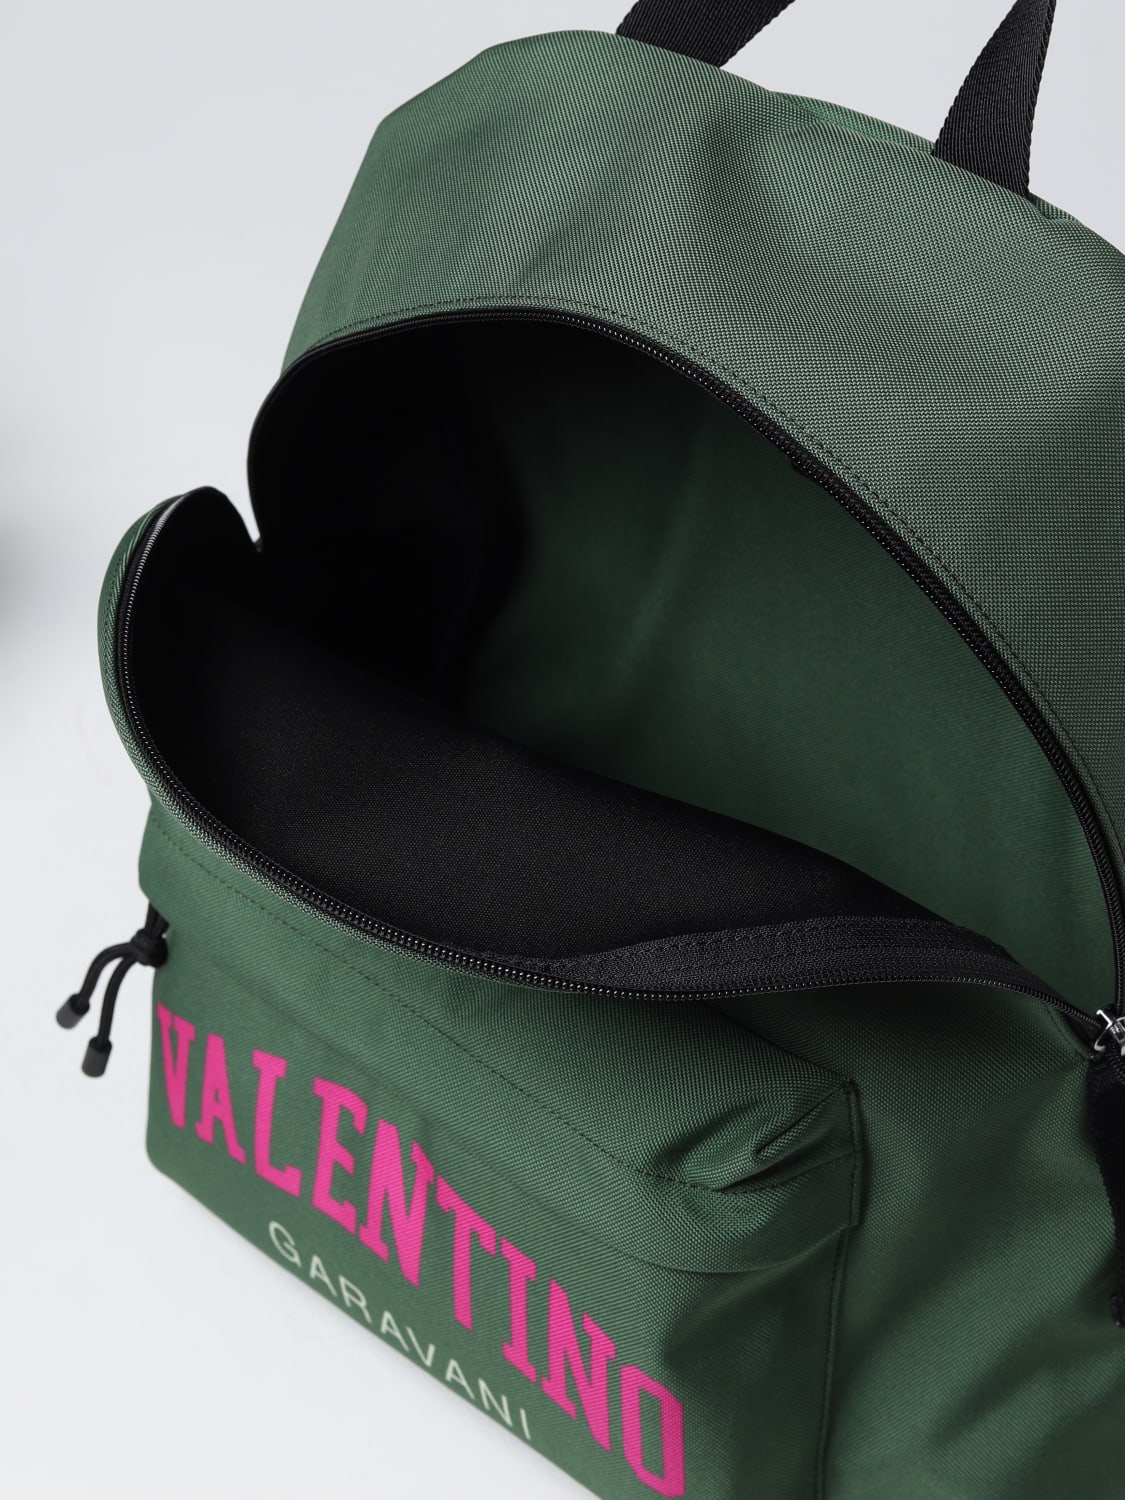 Valentino, Bags, Black Valentino Backpack